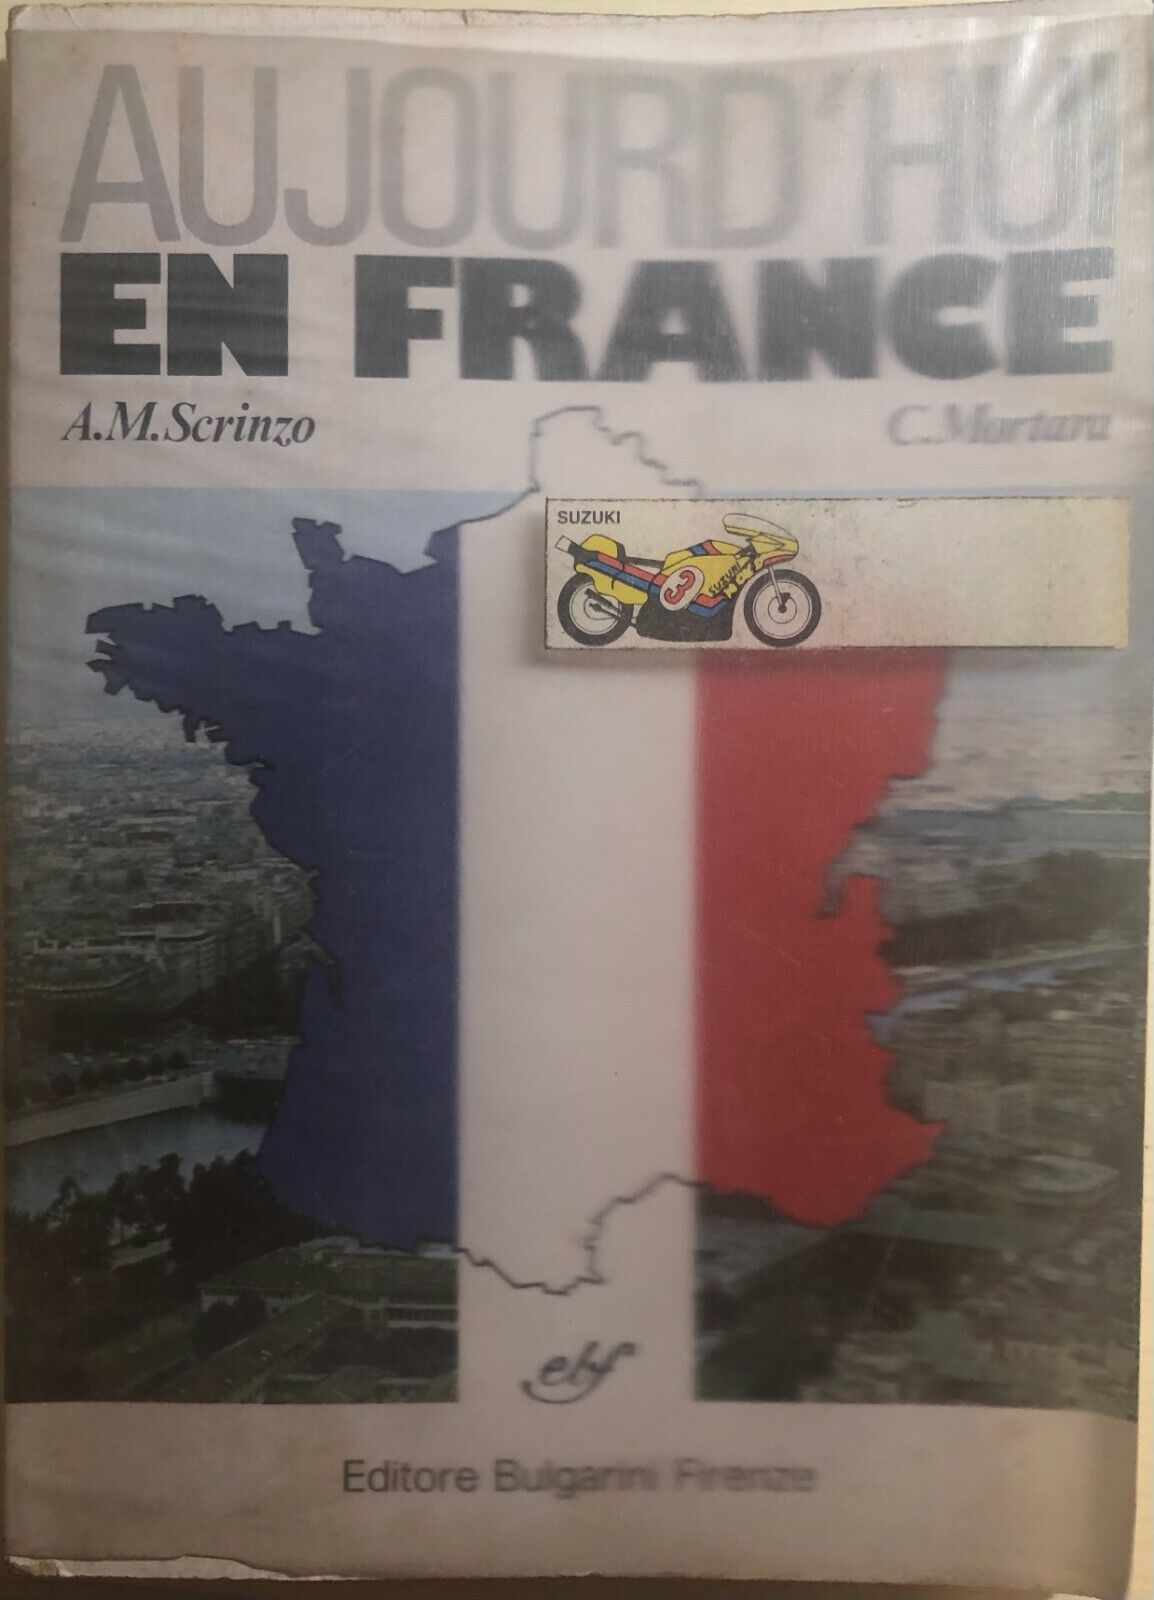 Aujourd'hui en France di Scrinzo-mortara,  1980,  Editore Bulgarini Firenze